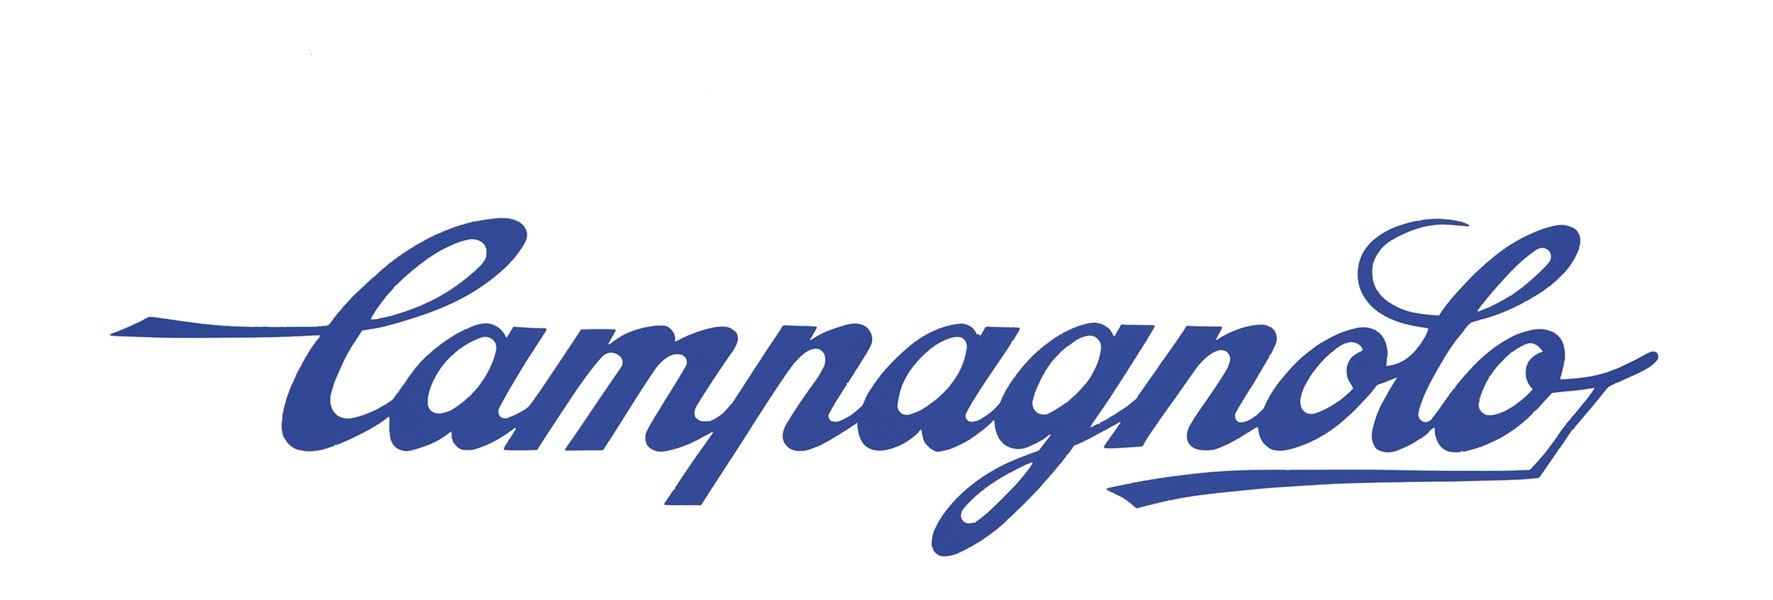 Campagnola Logo photo - 1